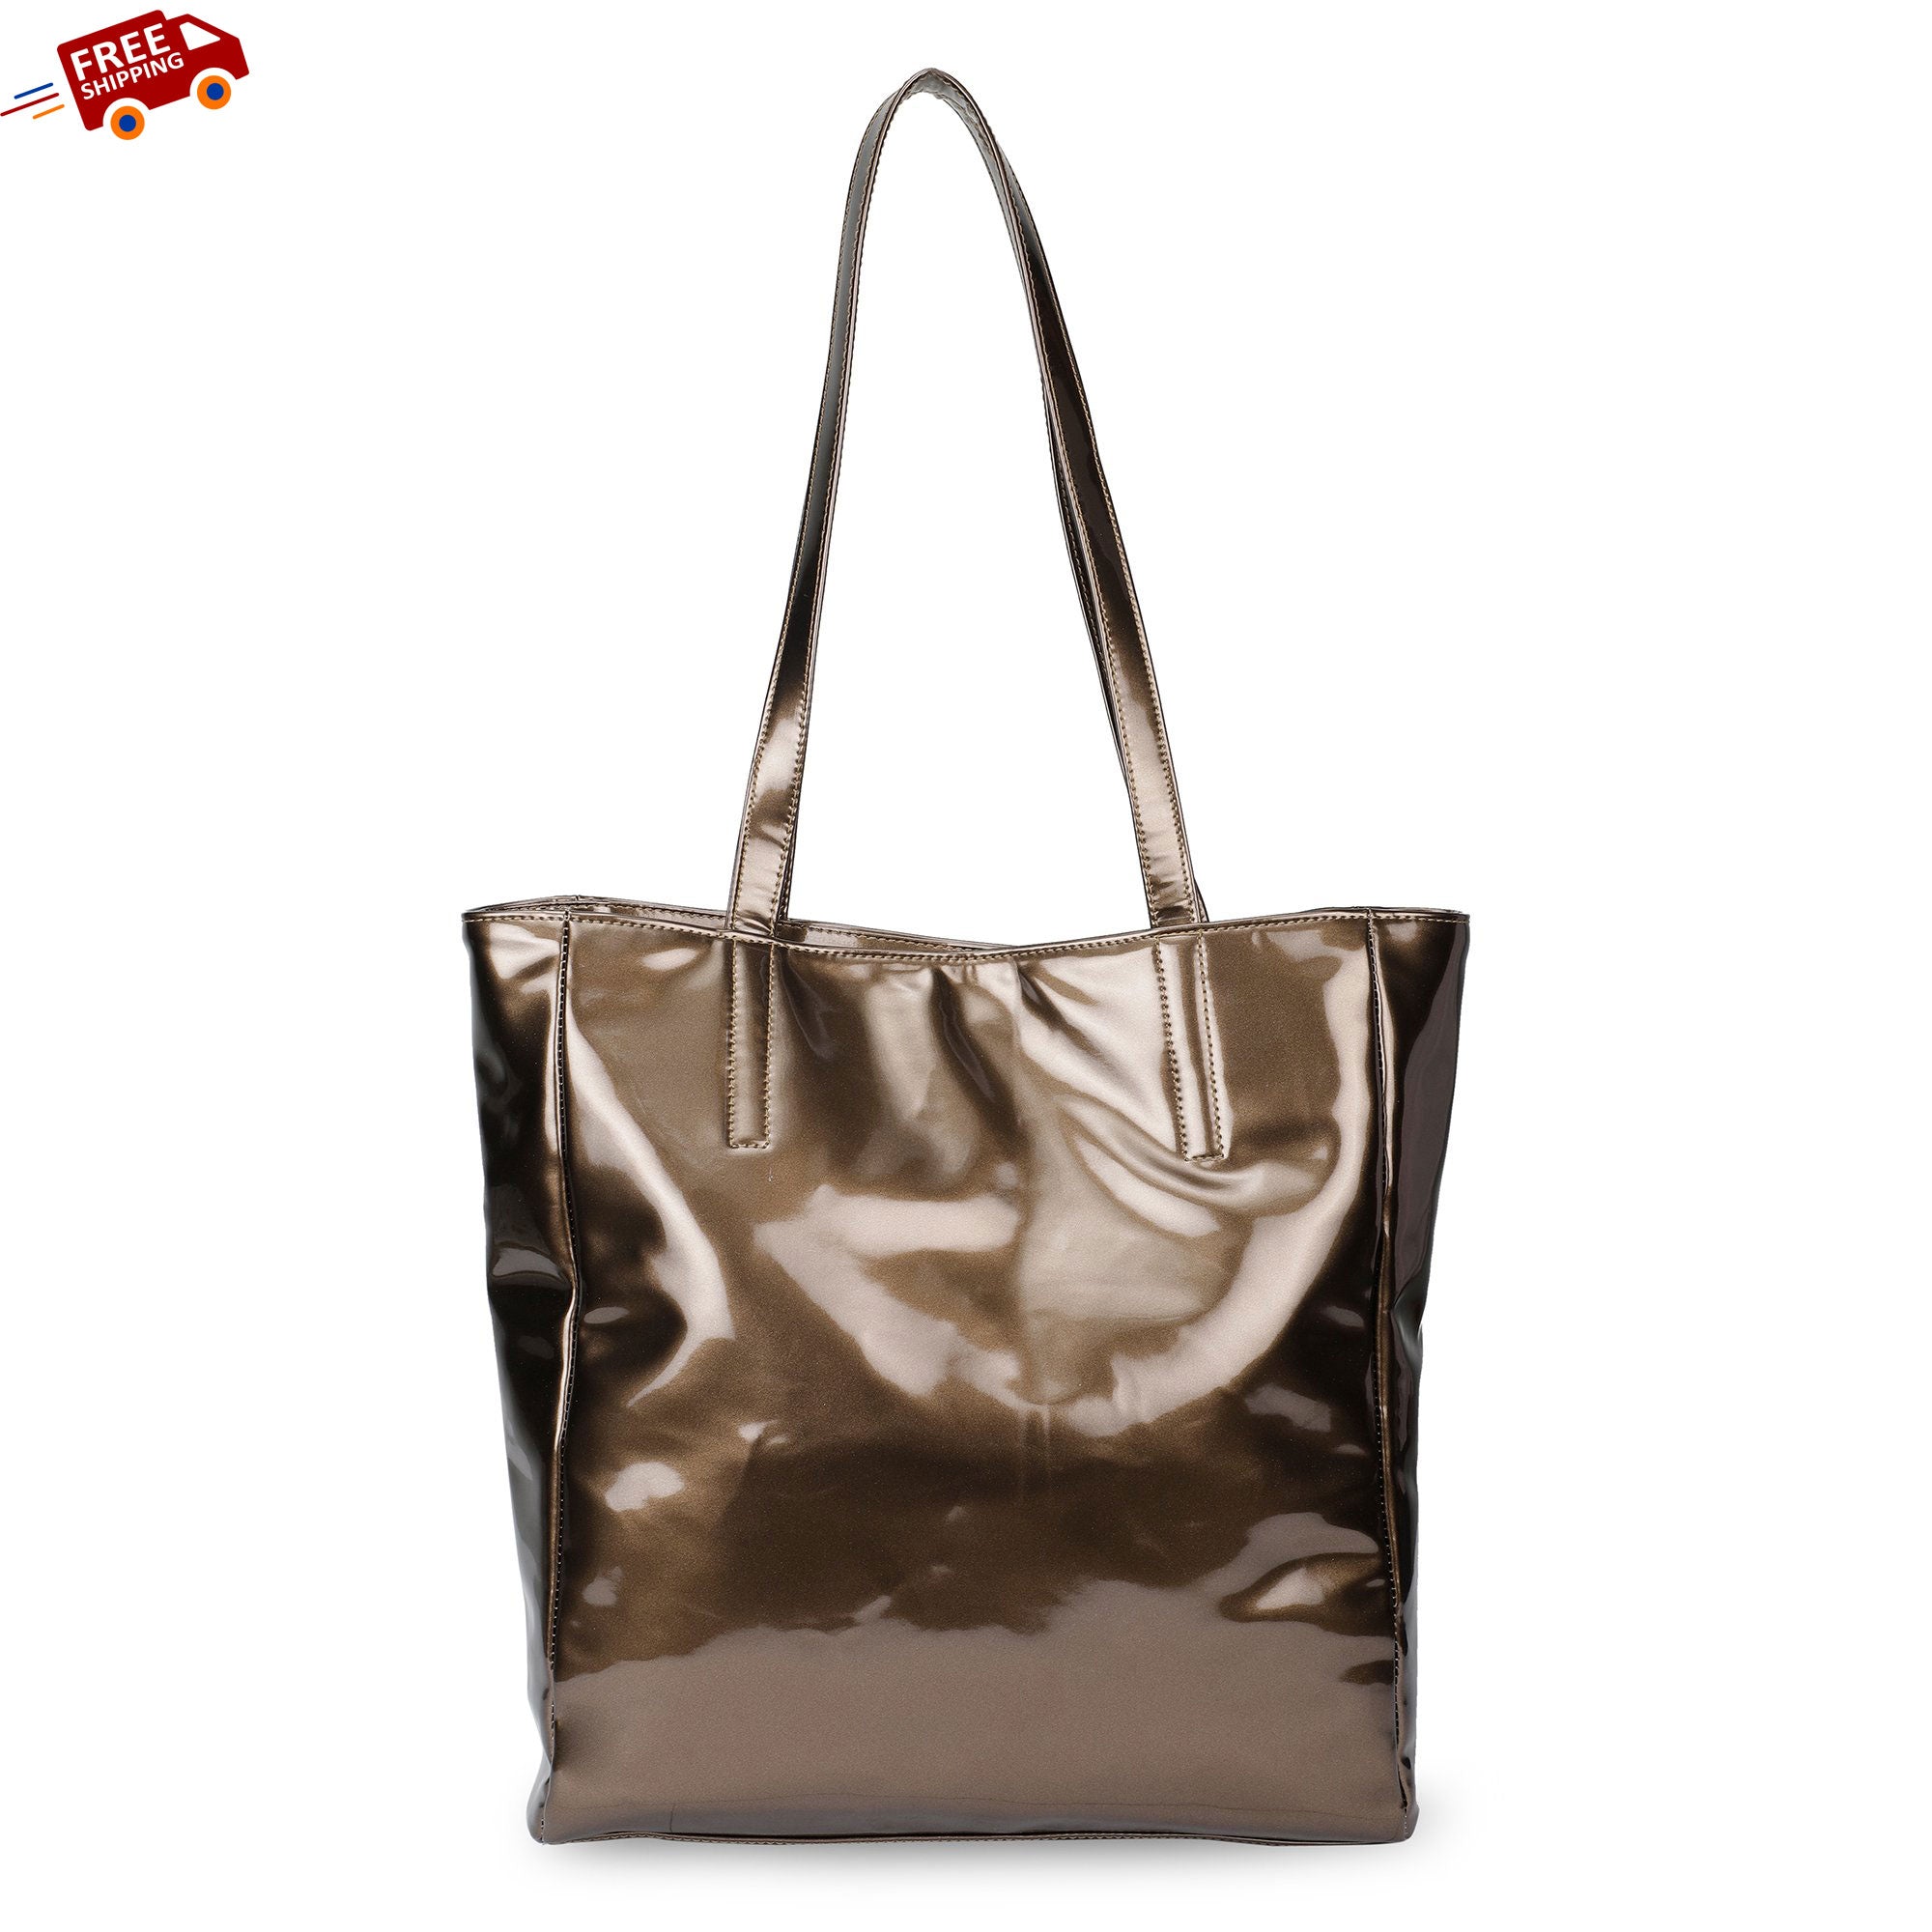 Chic Tote Oversized Handbag - Golden Brown-Book Bargain Buy 